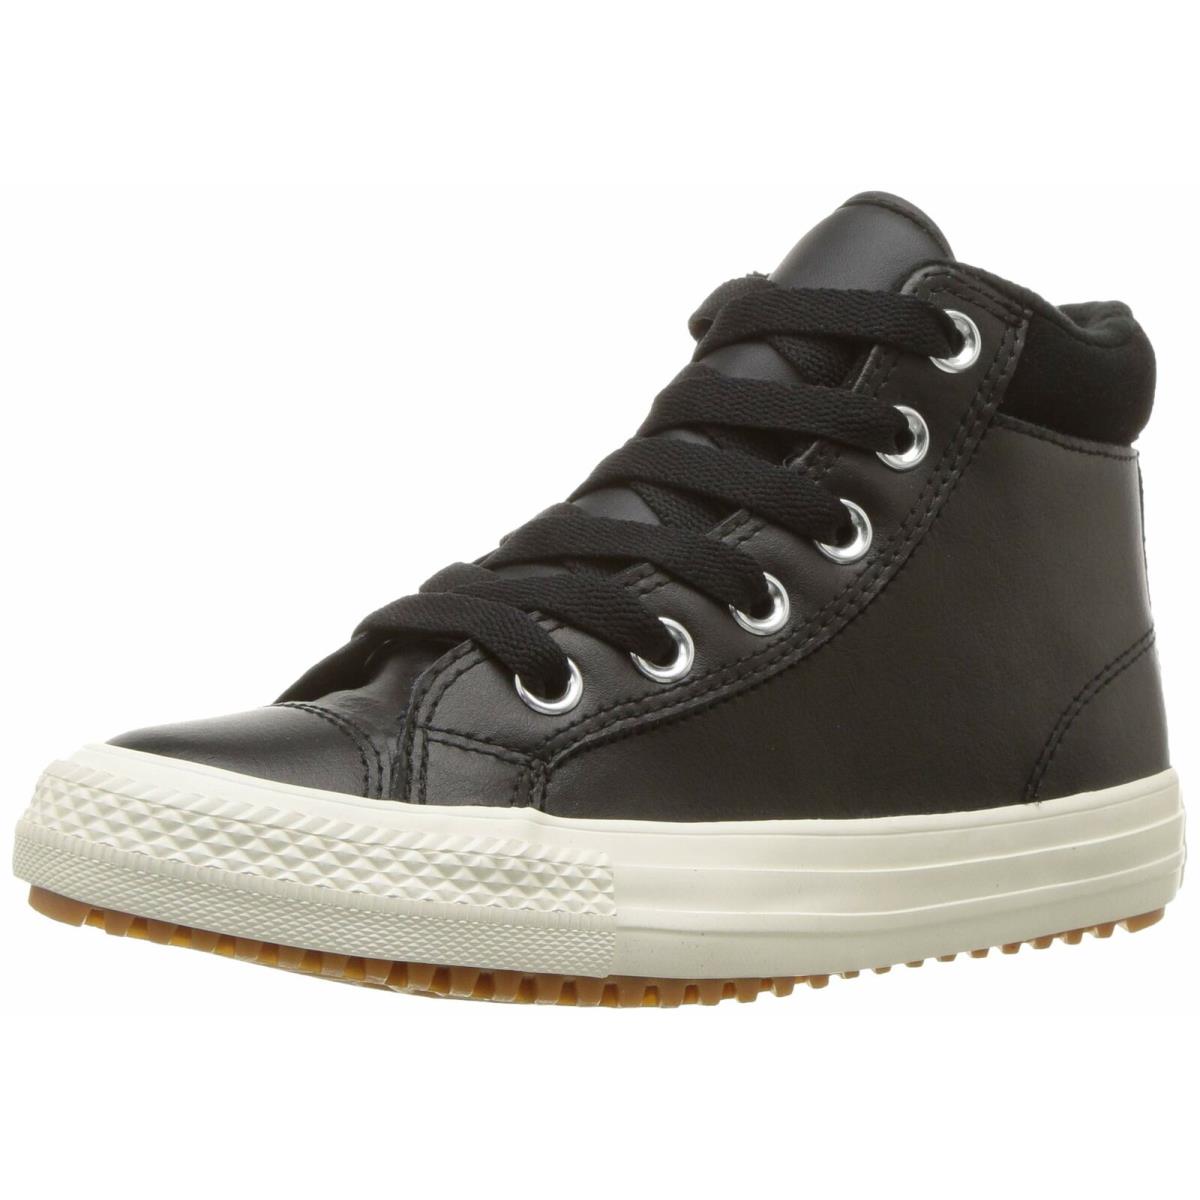 Converse Unisex Kids` Chuck Taylor High Top Boot Sneaker 661906C Black Size 4M - Black/Burnt Caramel/Black